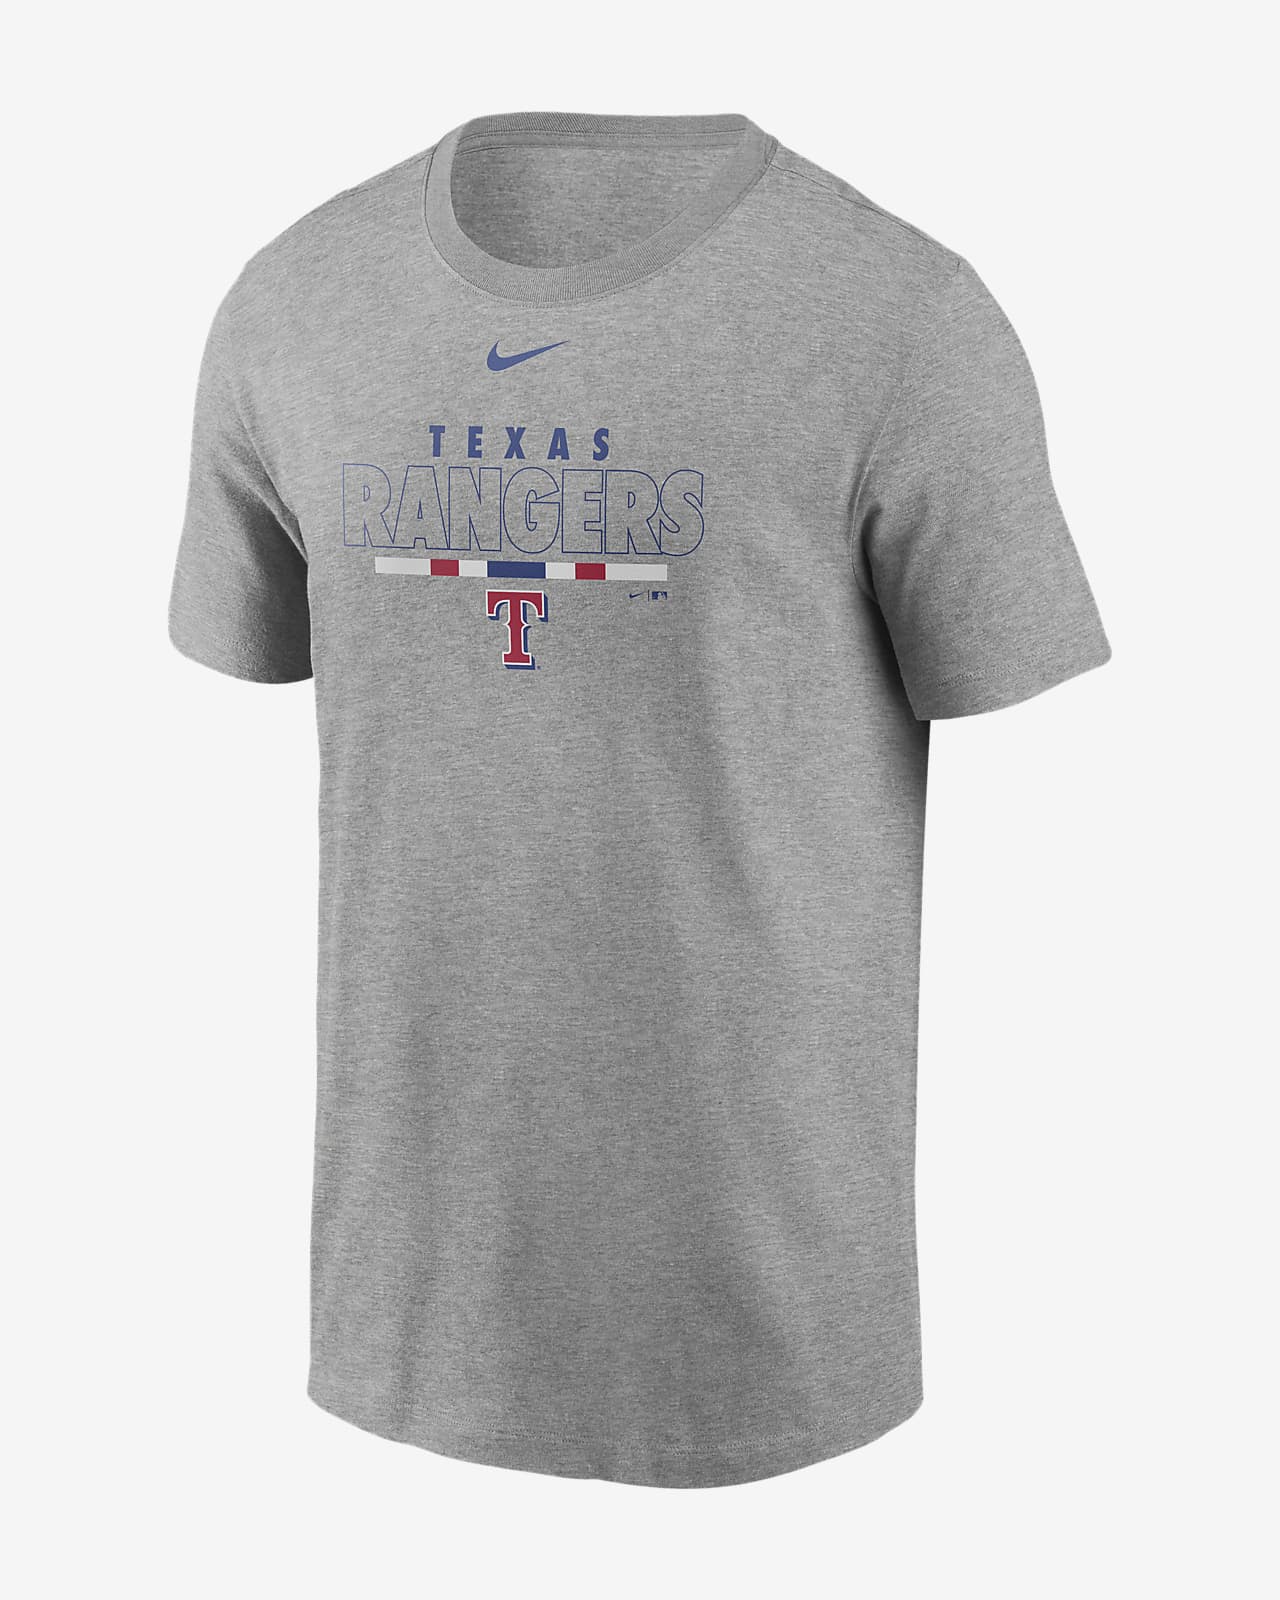 white texas rangers t shirt